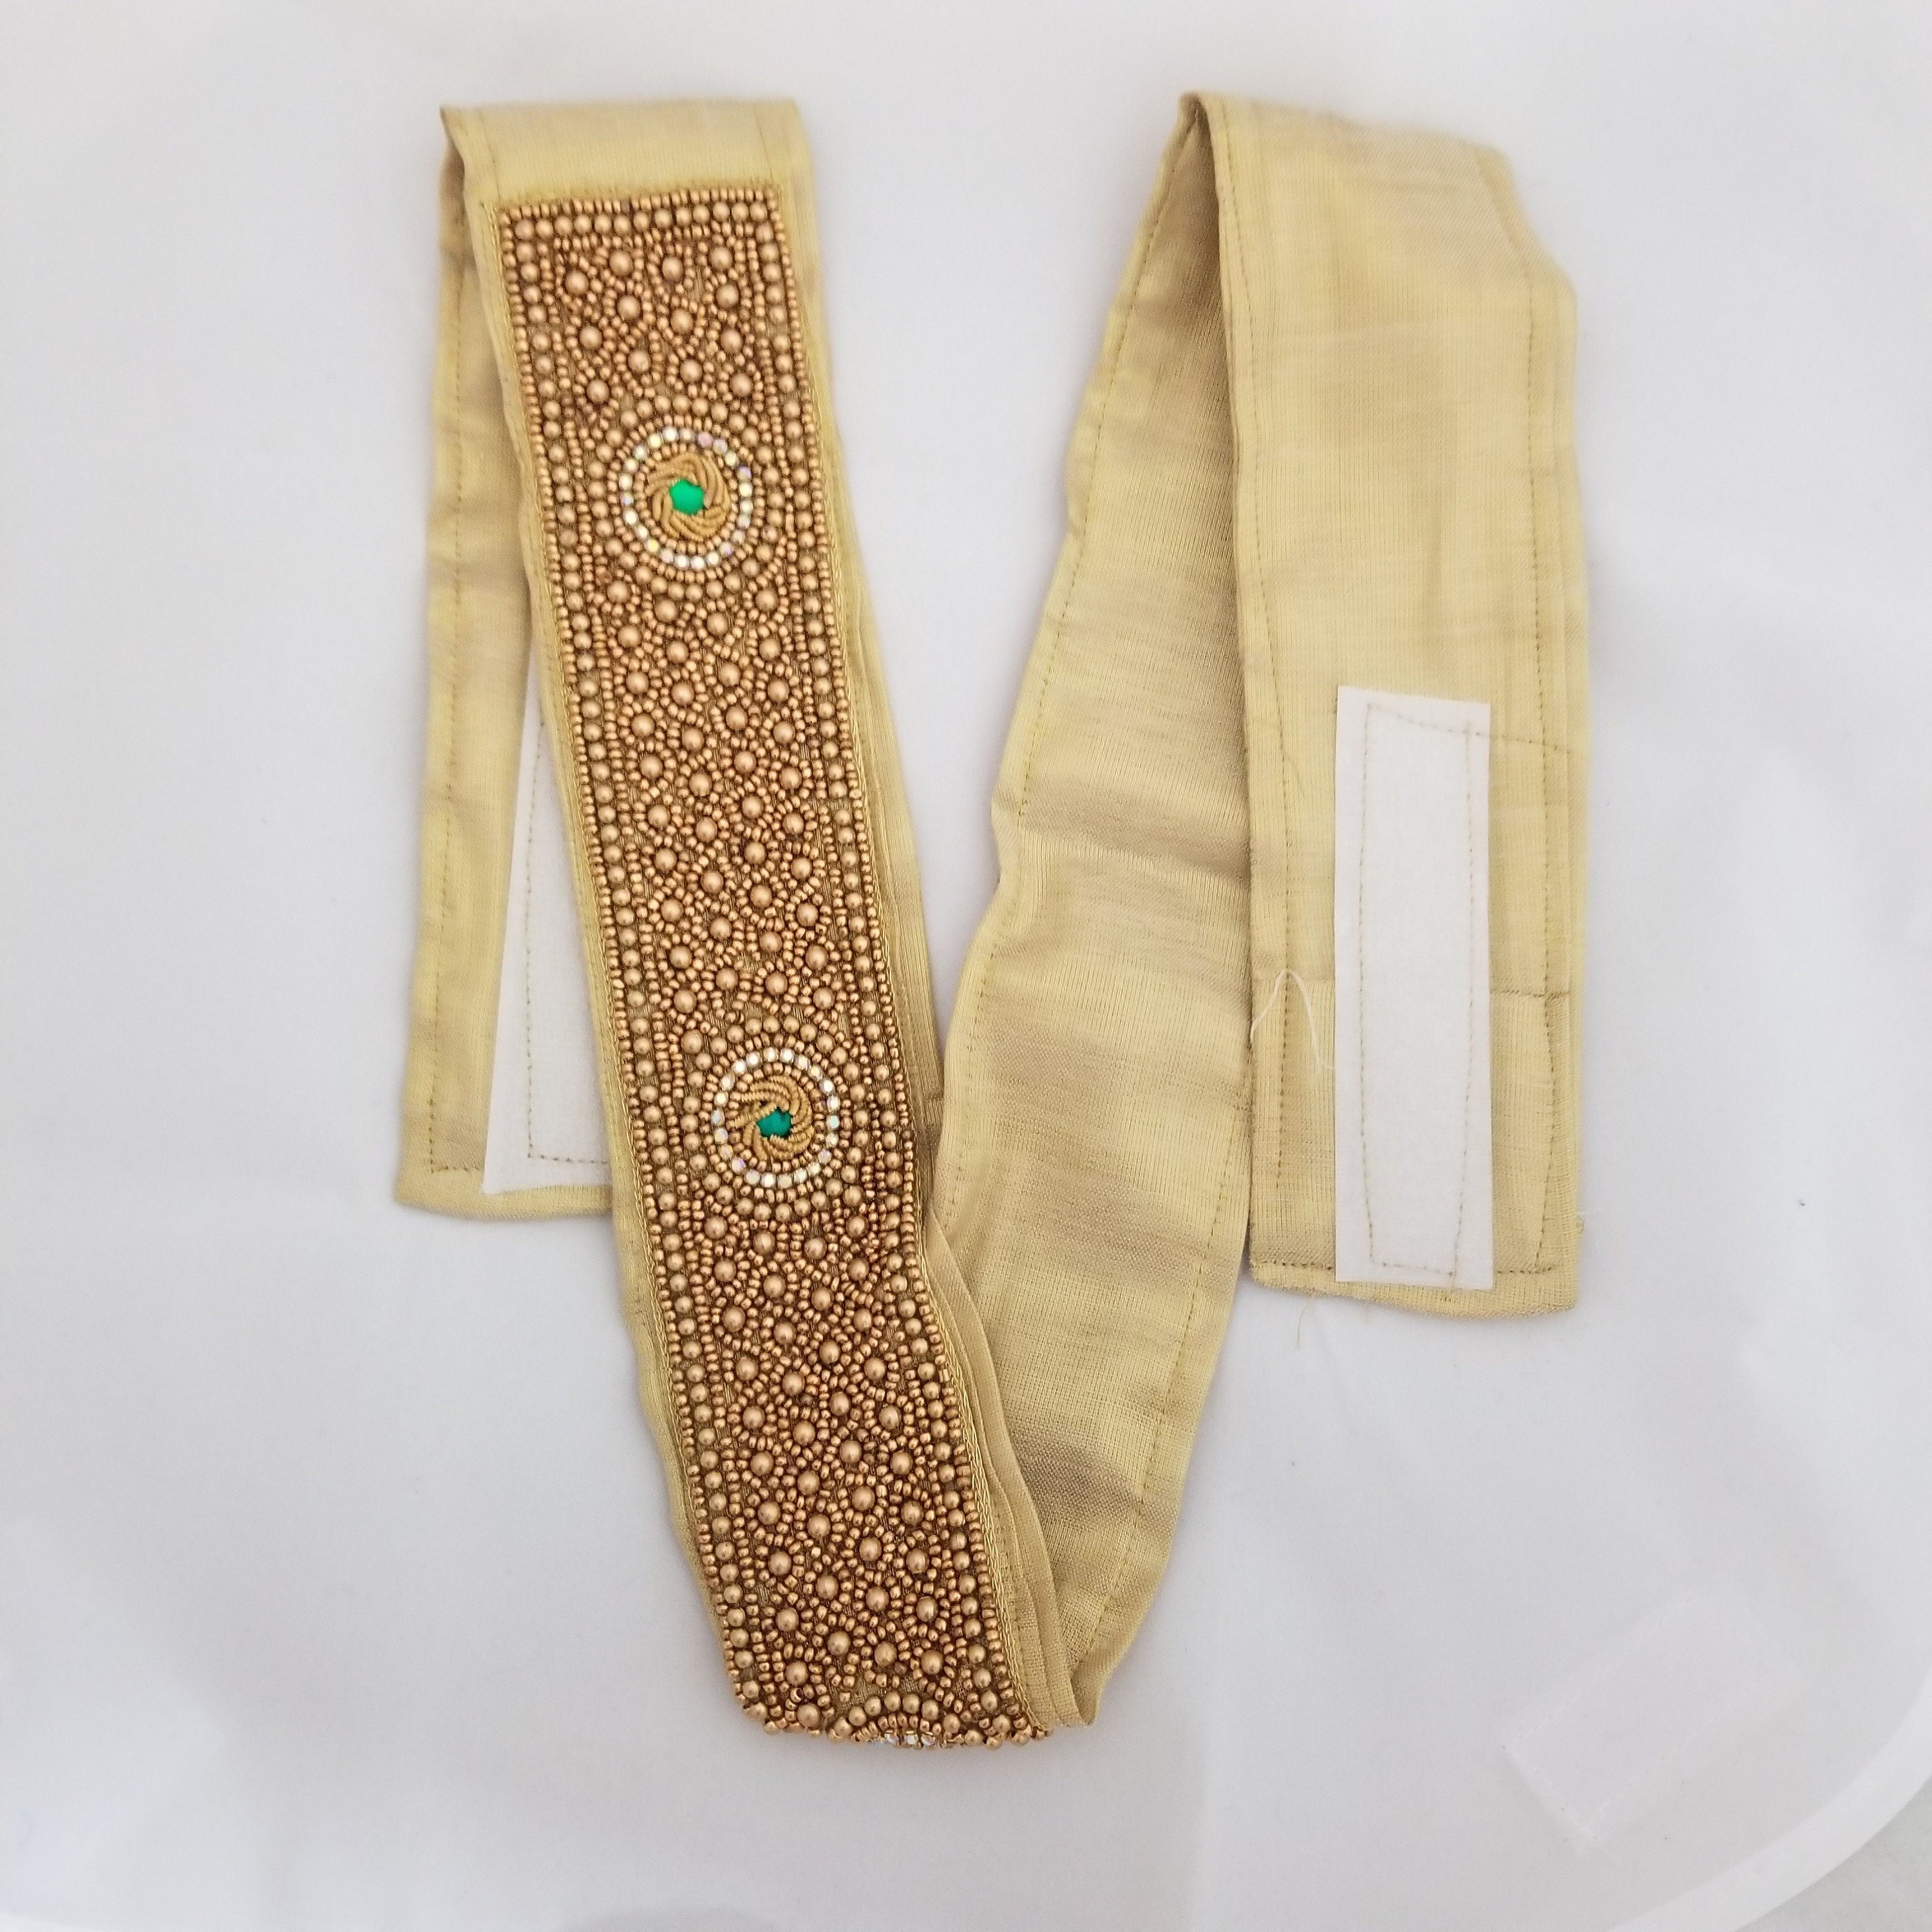 Green Stone Golden Aari work Hip Belt with Fastner - Saree Belt - Matching for Saree and Lehenga -waist belt Fashion Jewelry